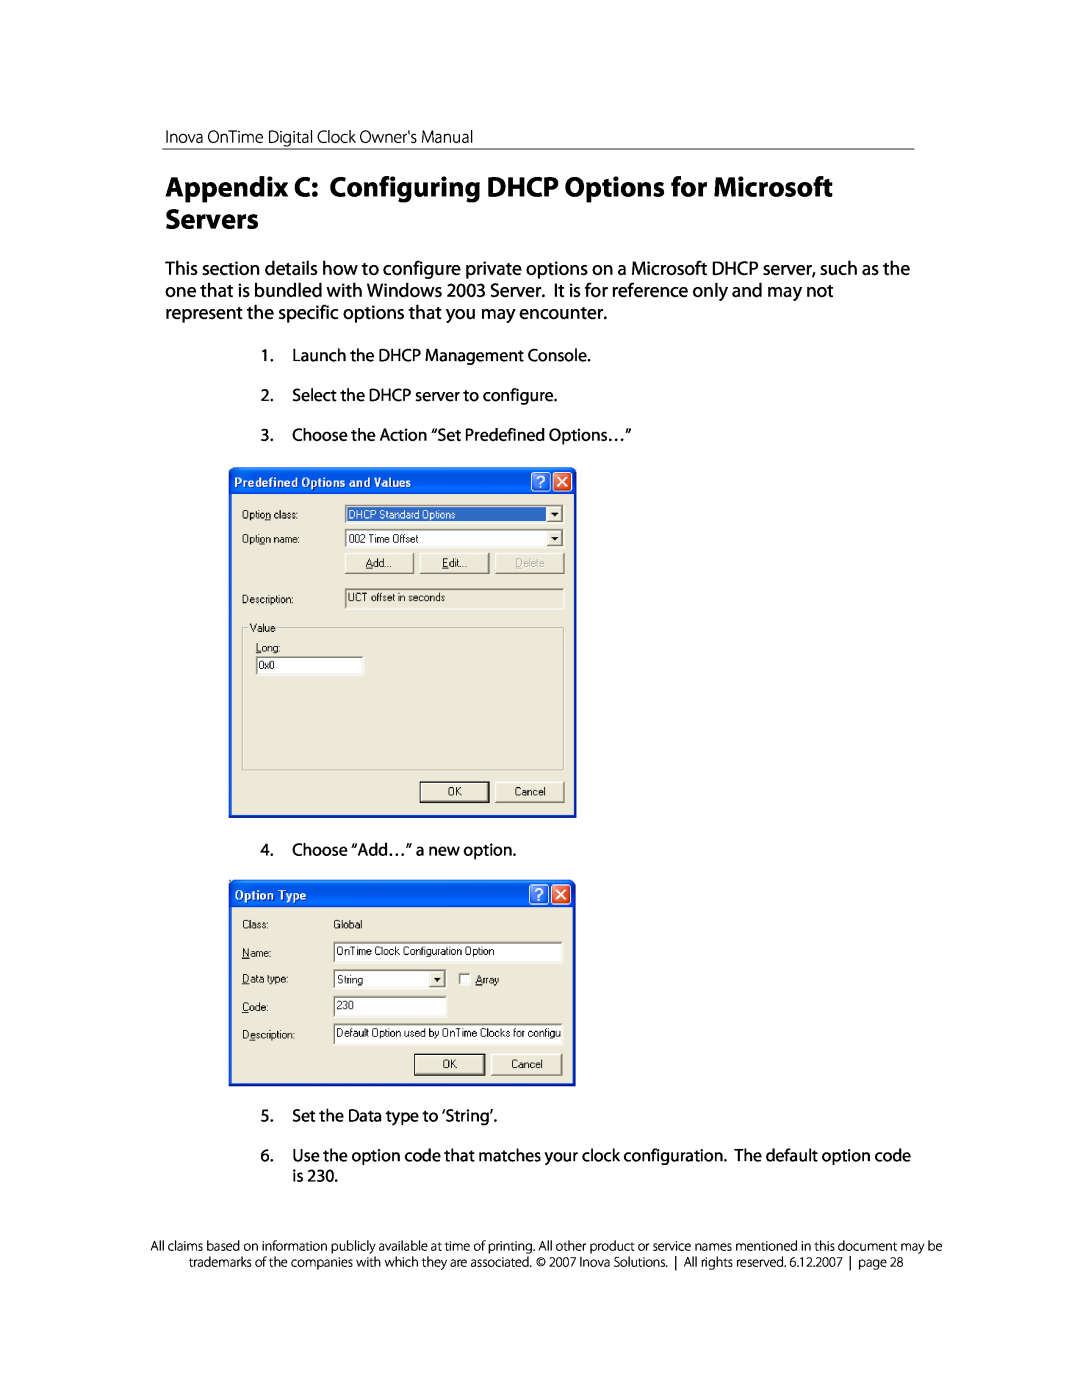 Inova OnTimeTM owner manual Appendix C Configuring DHCP Options for Microsoft Servers 